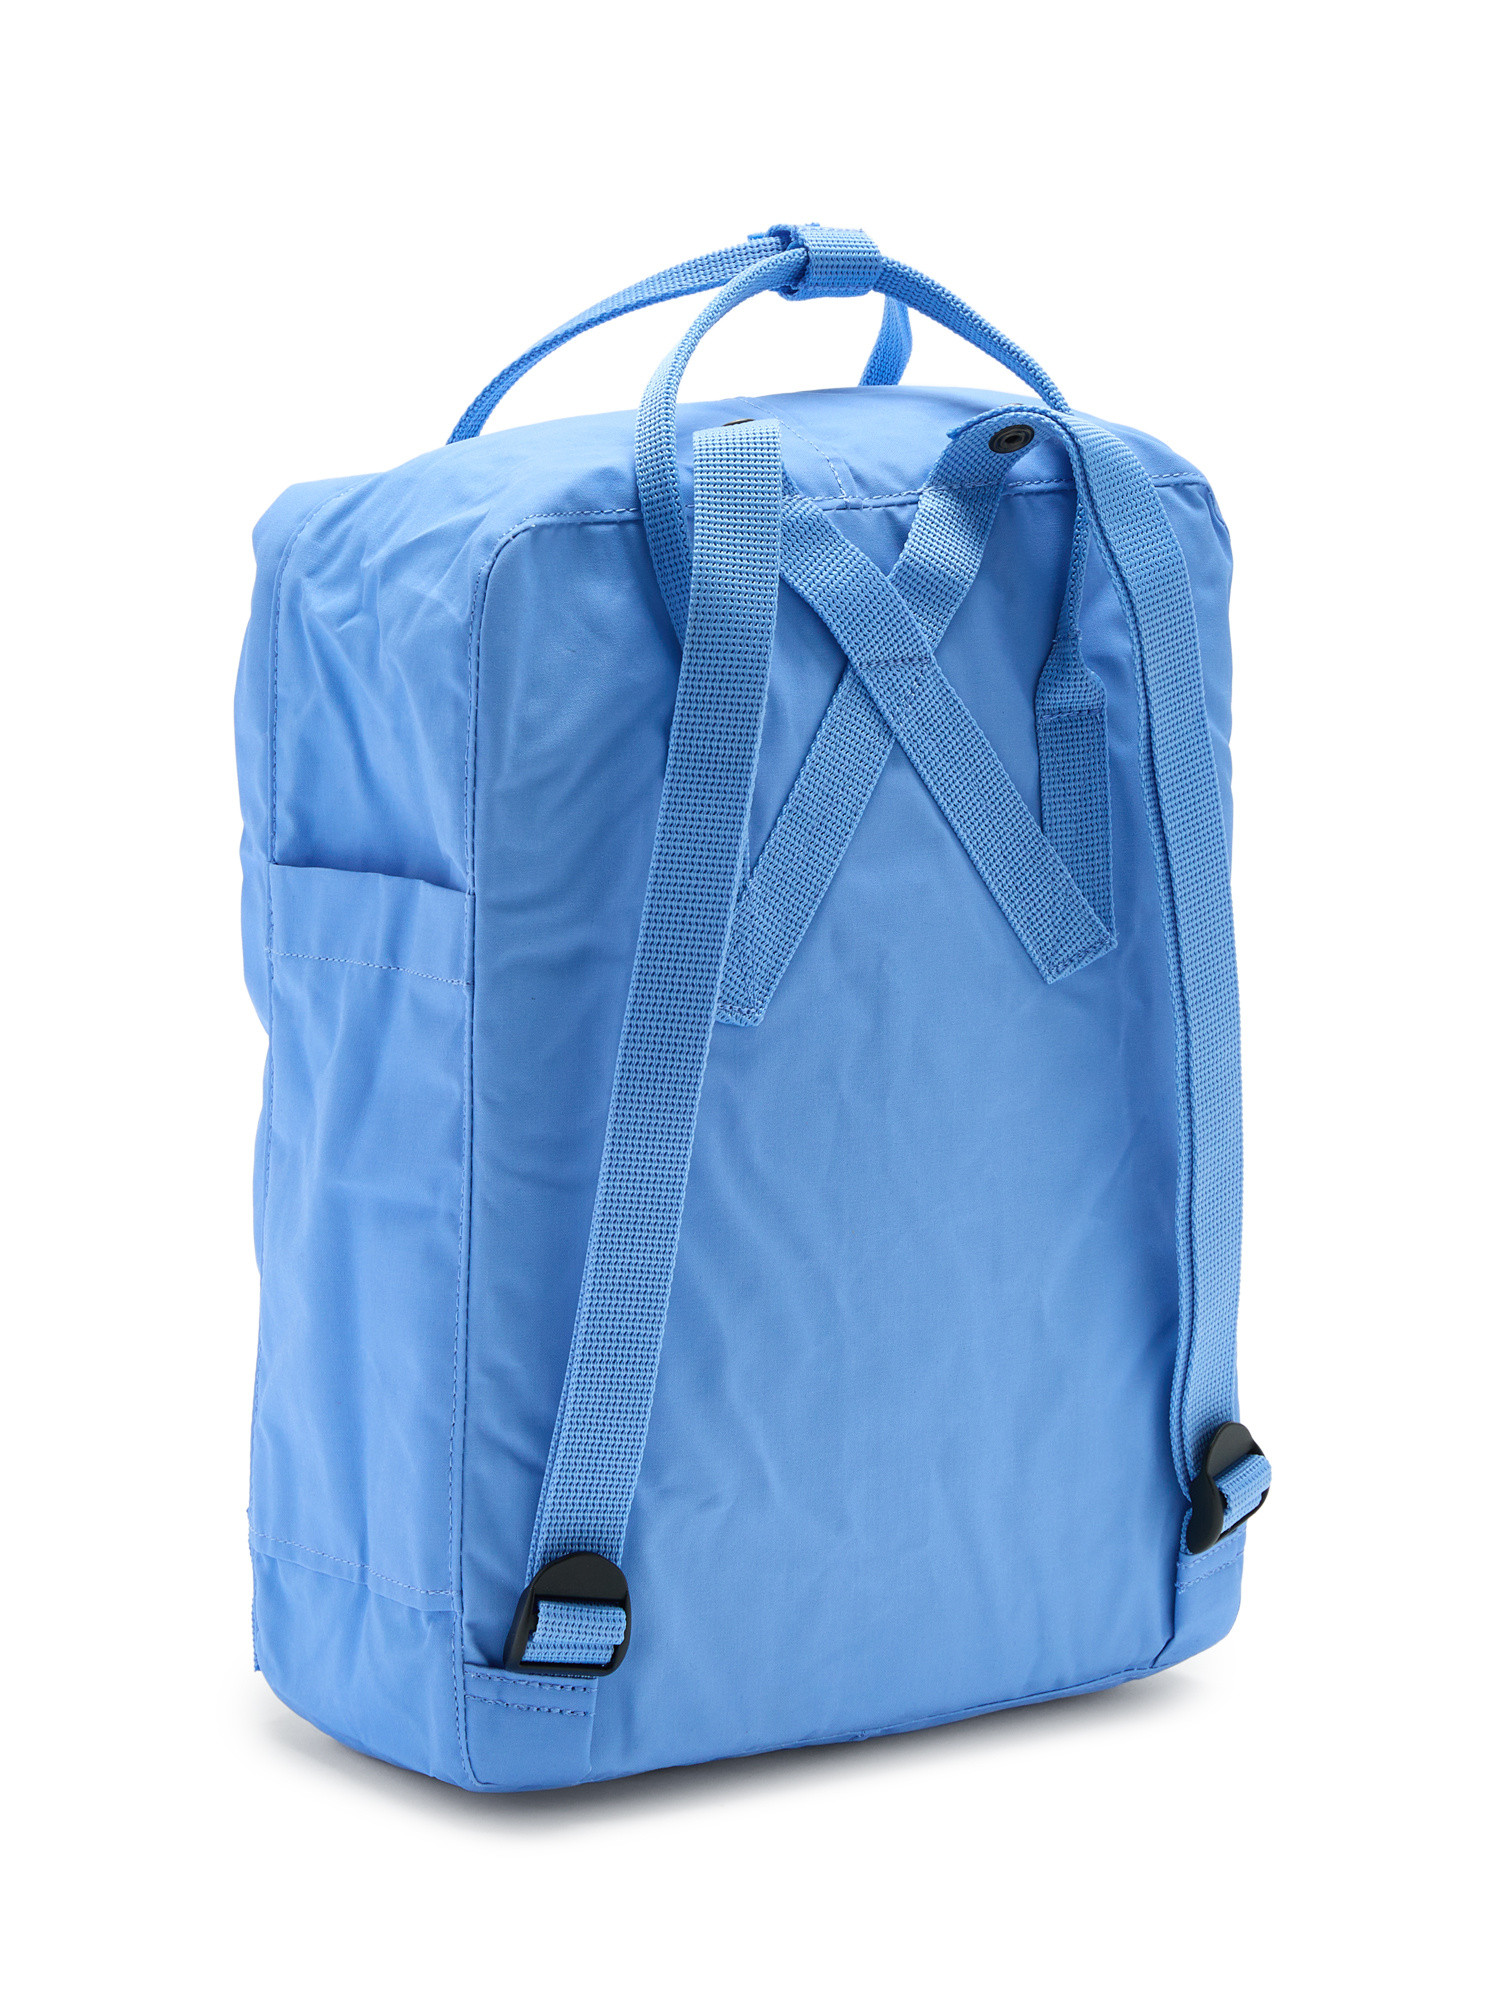 Fjallraven - Classic Kånken backpack in durable Vinylon fabric, Light Blue, large image number 1